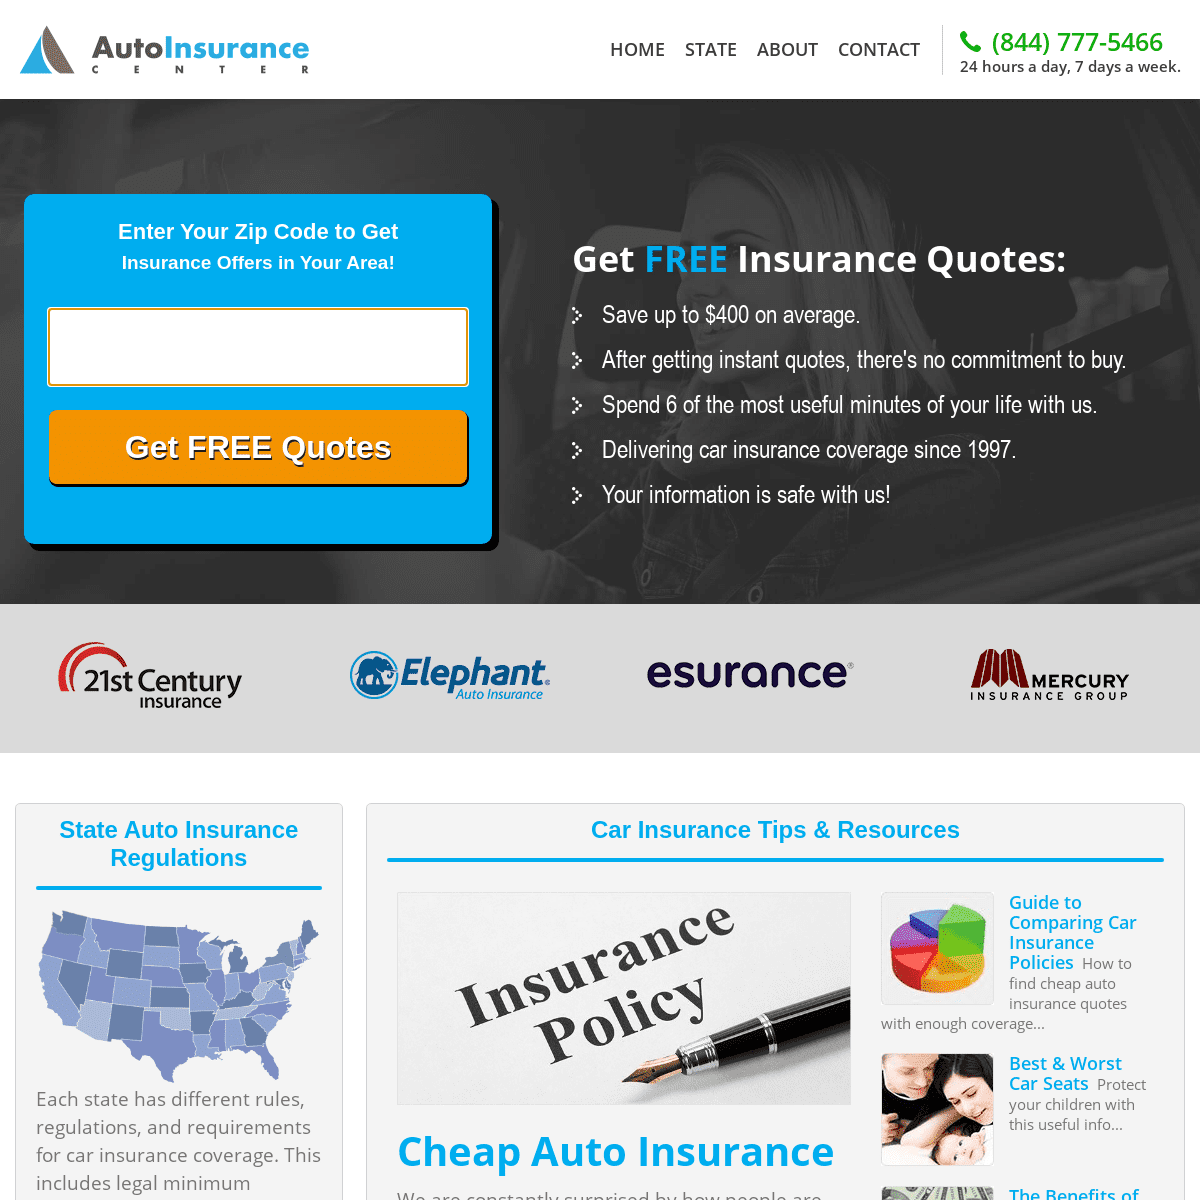 A complete backup of autoinsurancecenter.com